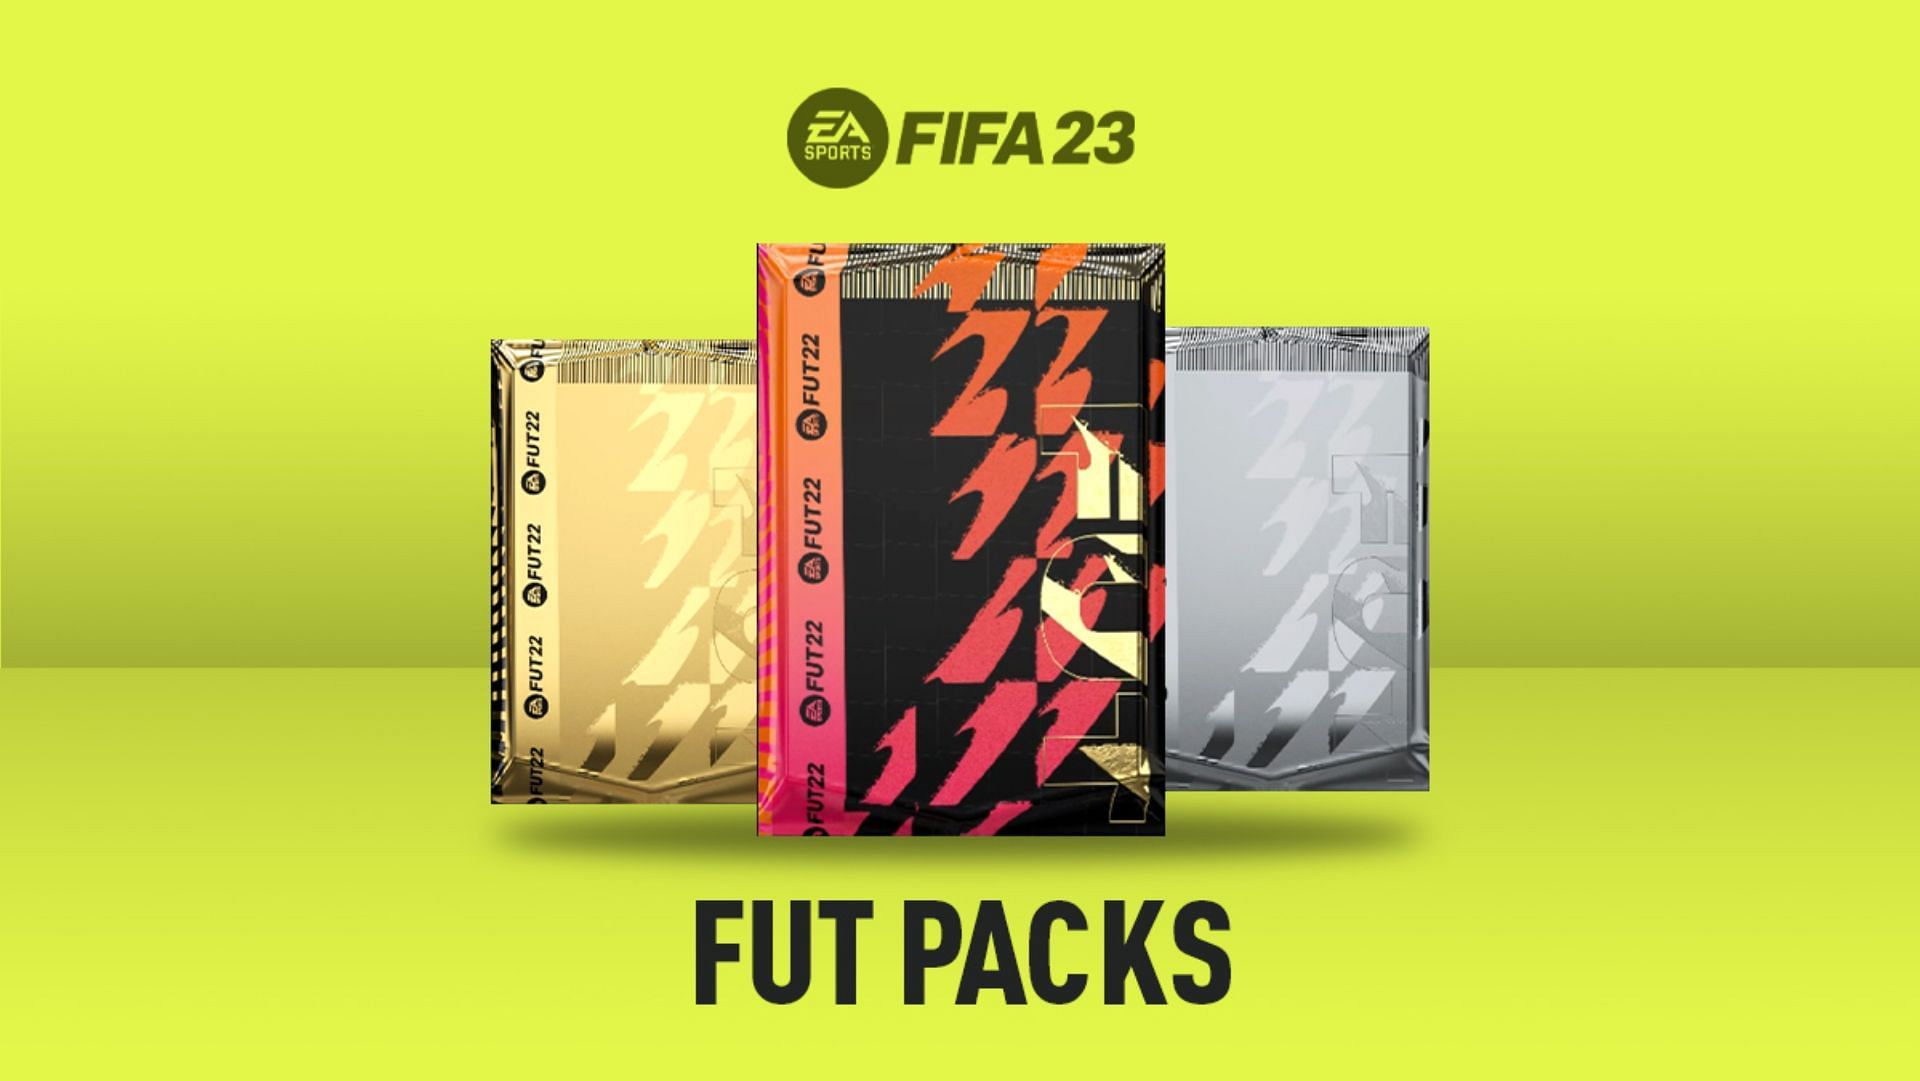 FIFA 23 Price Range Updates